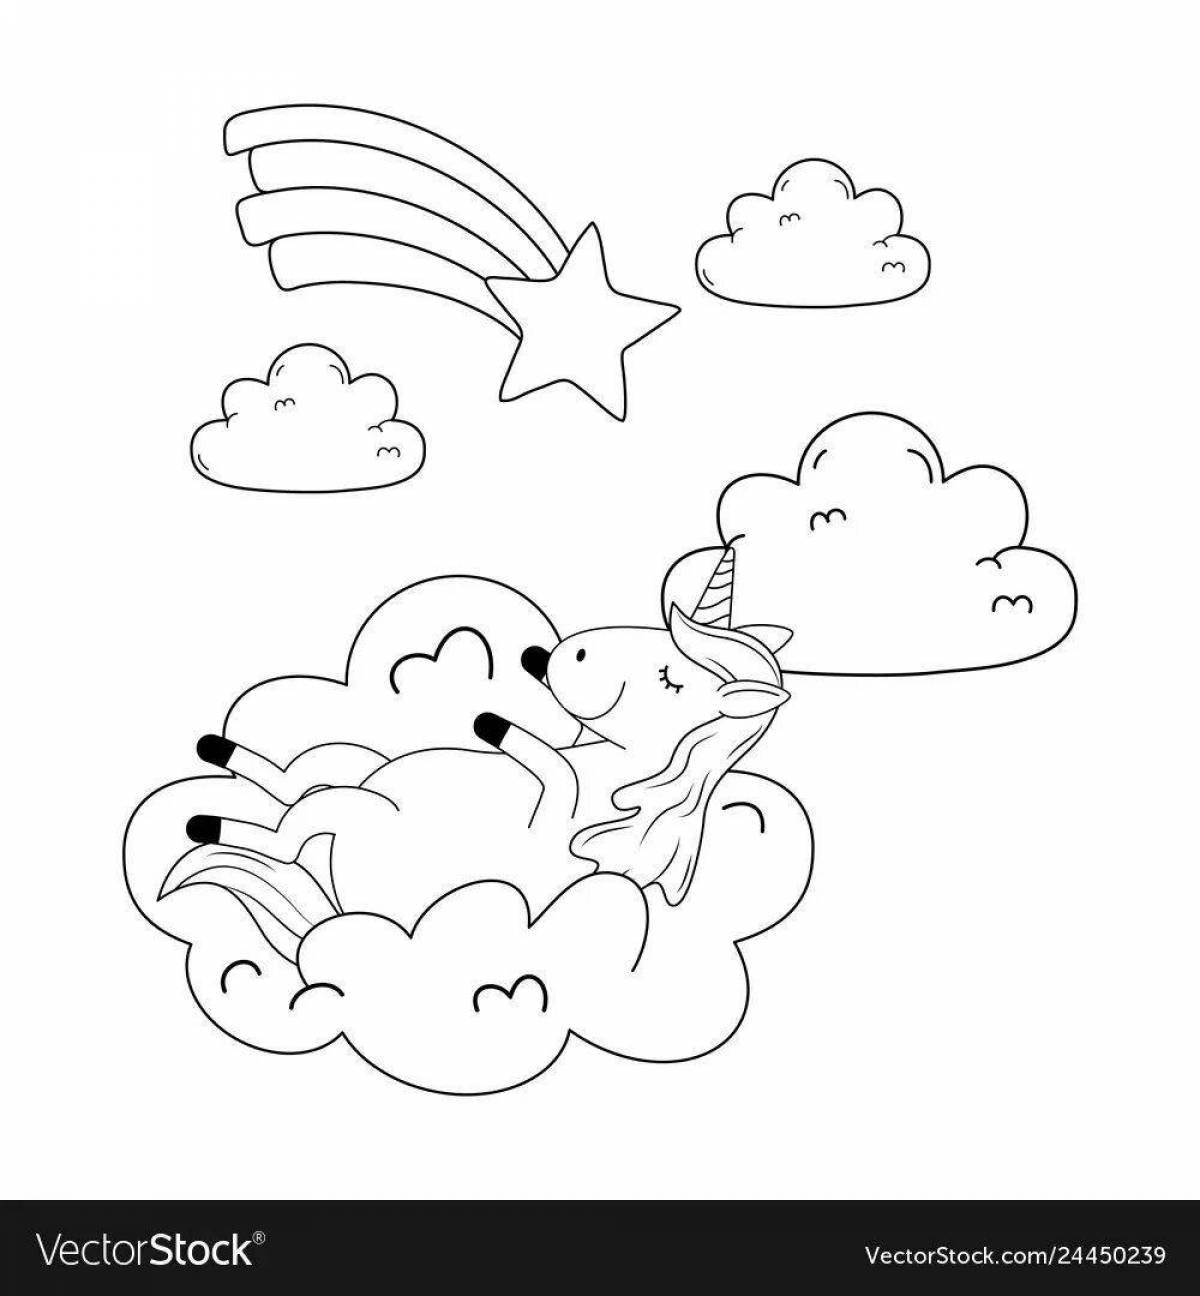 Playful coloring unicorn cloud